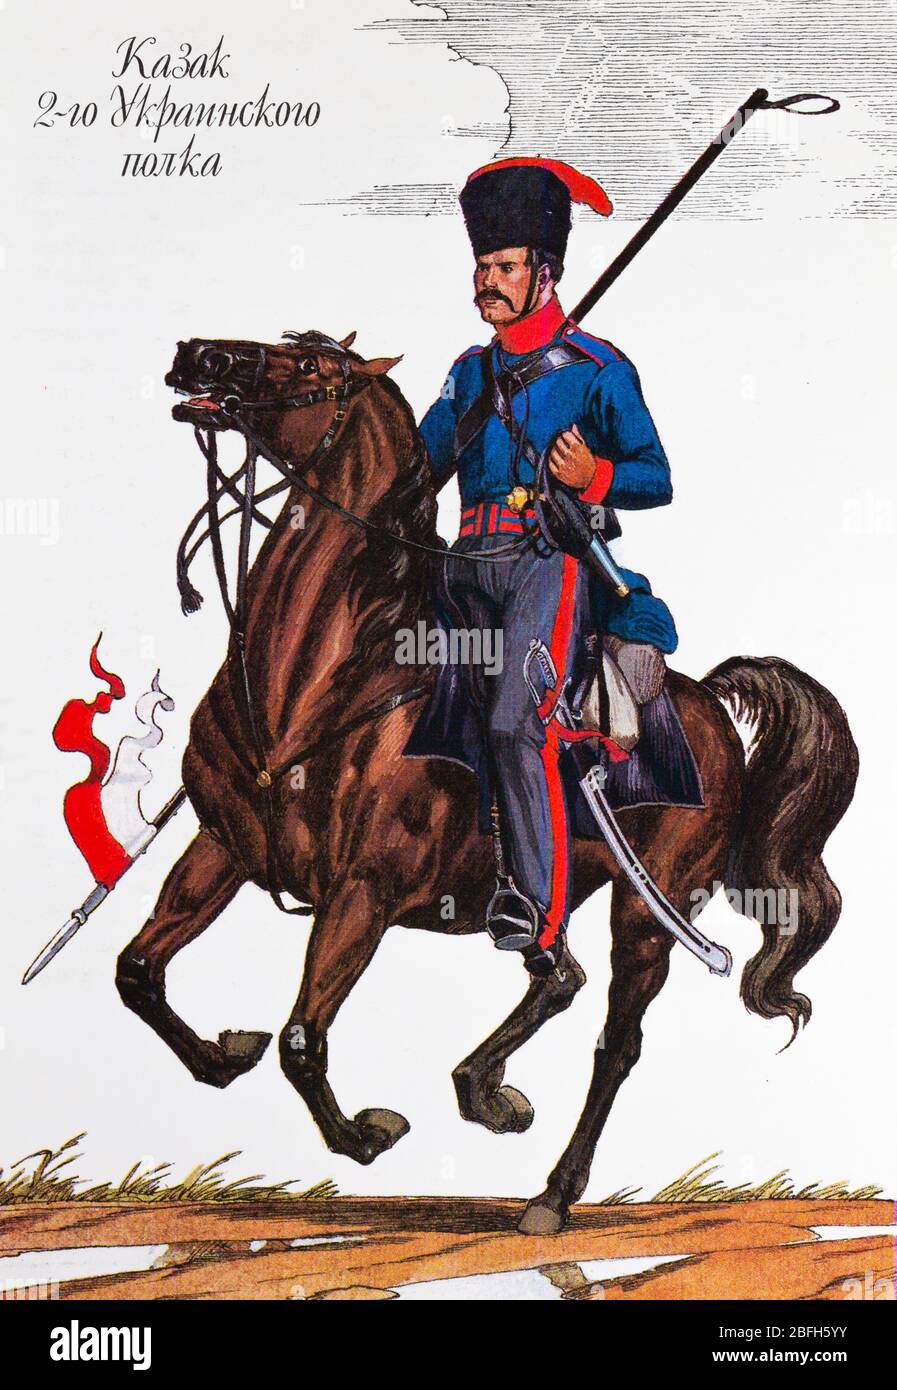 Second Ukrainian regiment cossack, 1812, 19th century Russian army uniform, Russia Stock Photo